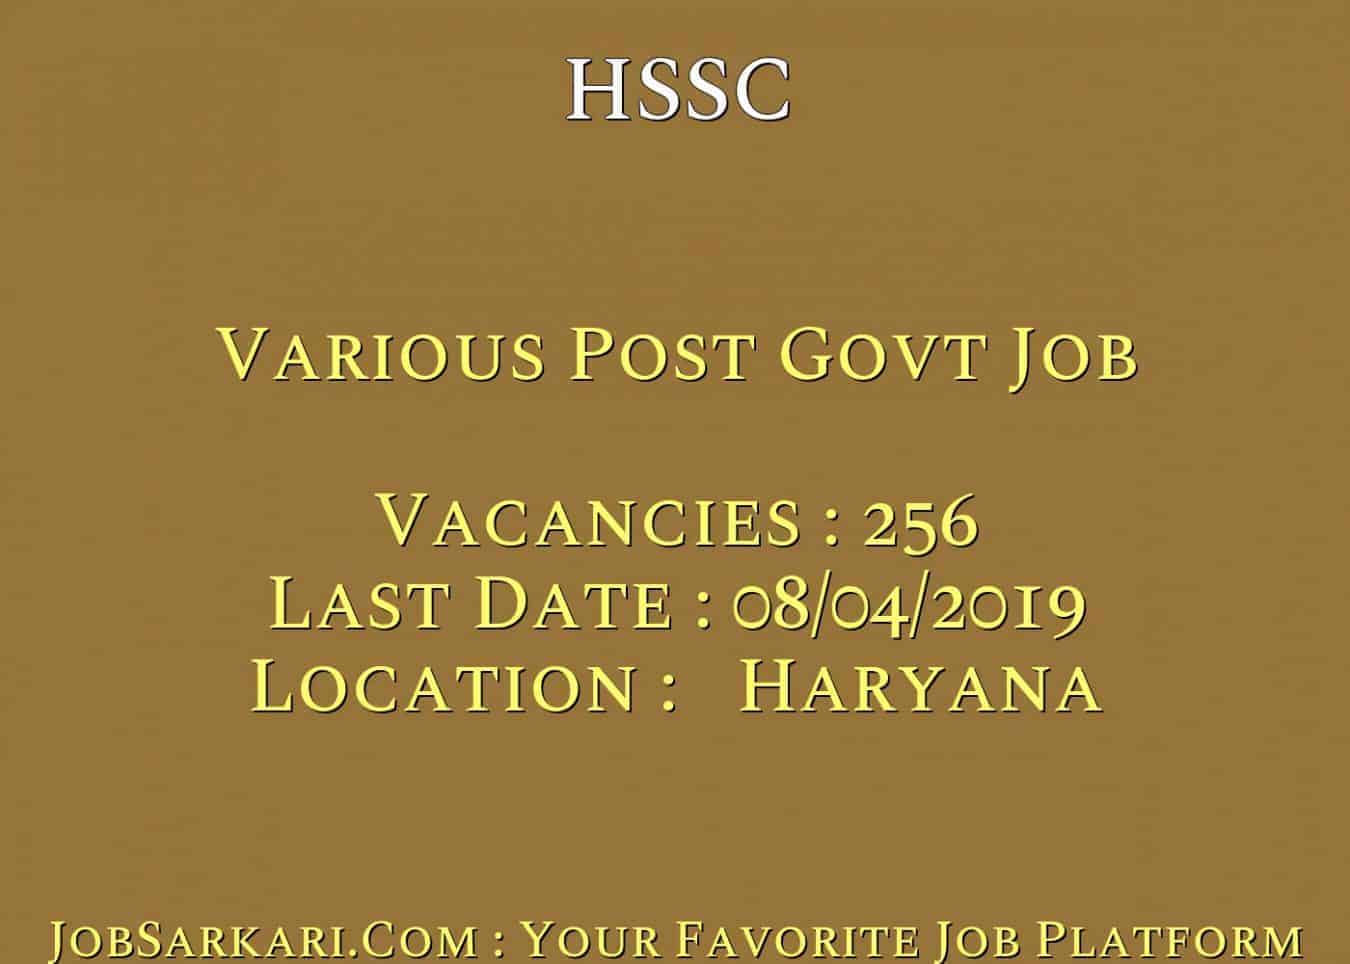 HSSC Recruitment 2019 For Various Post Govt Job